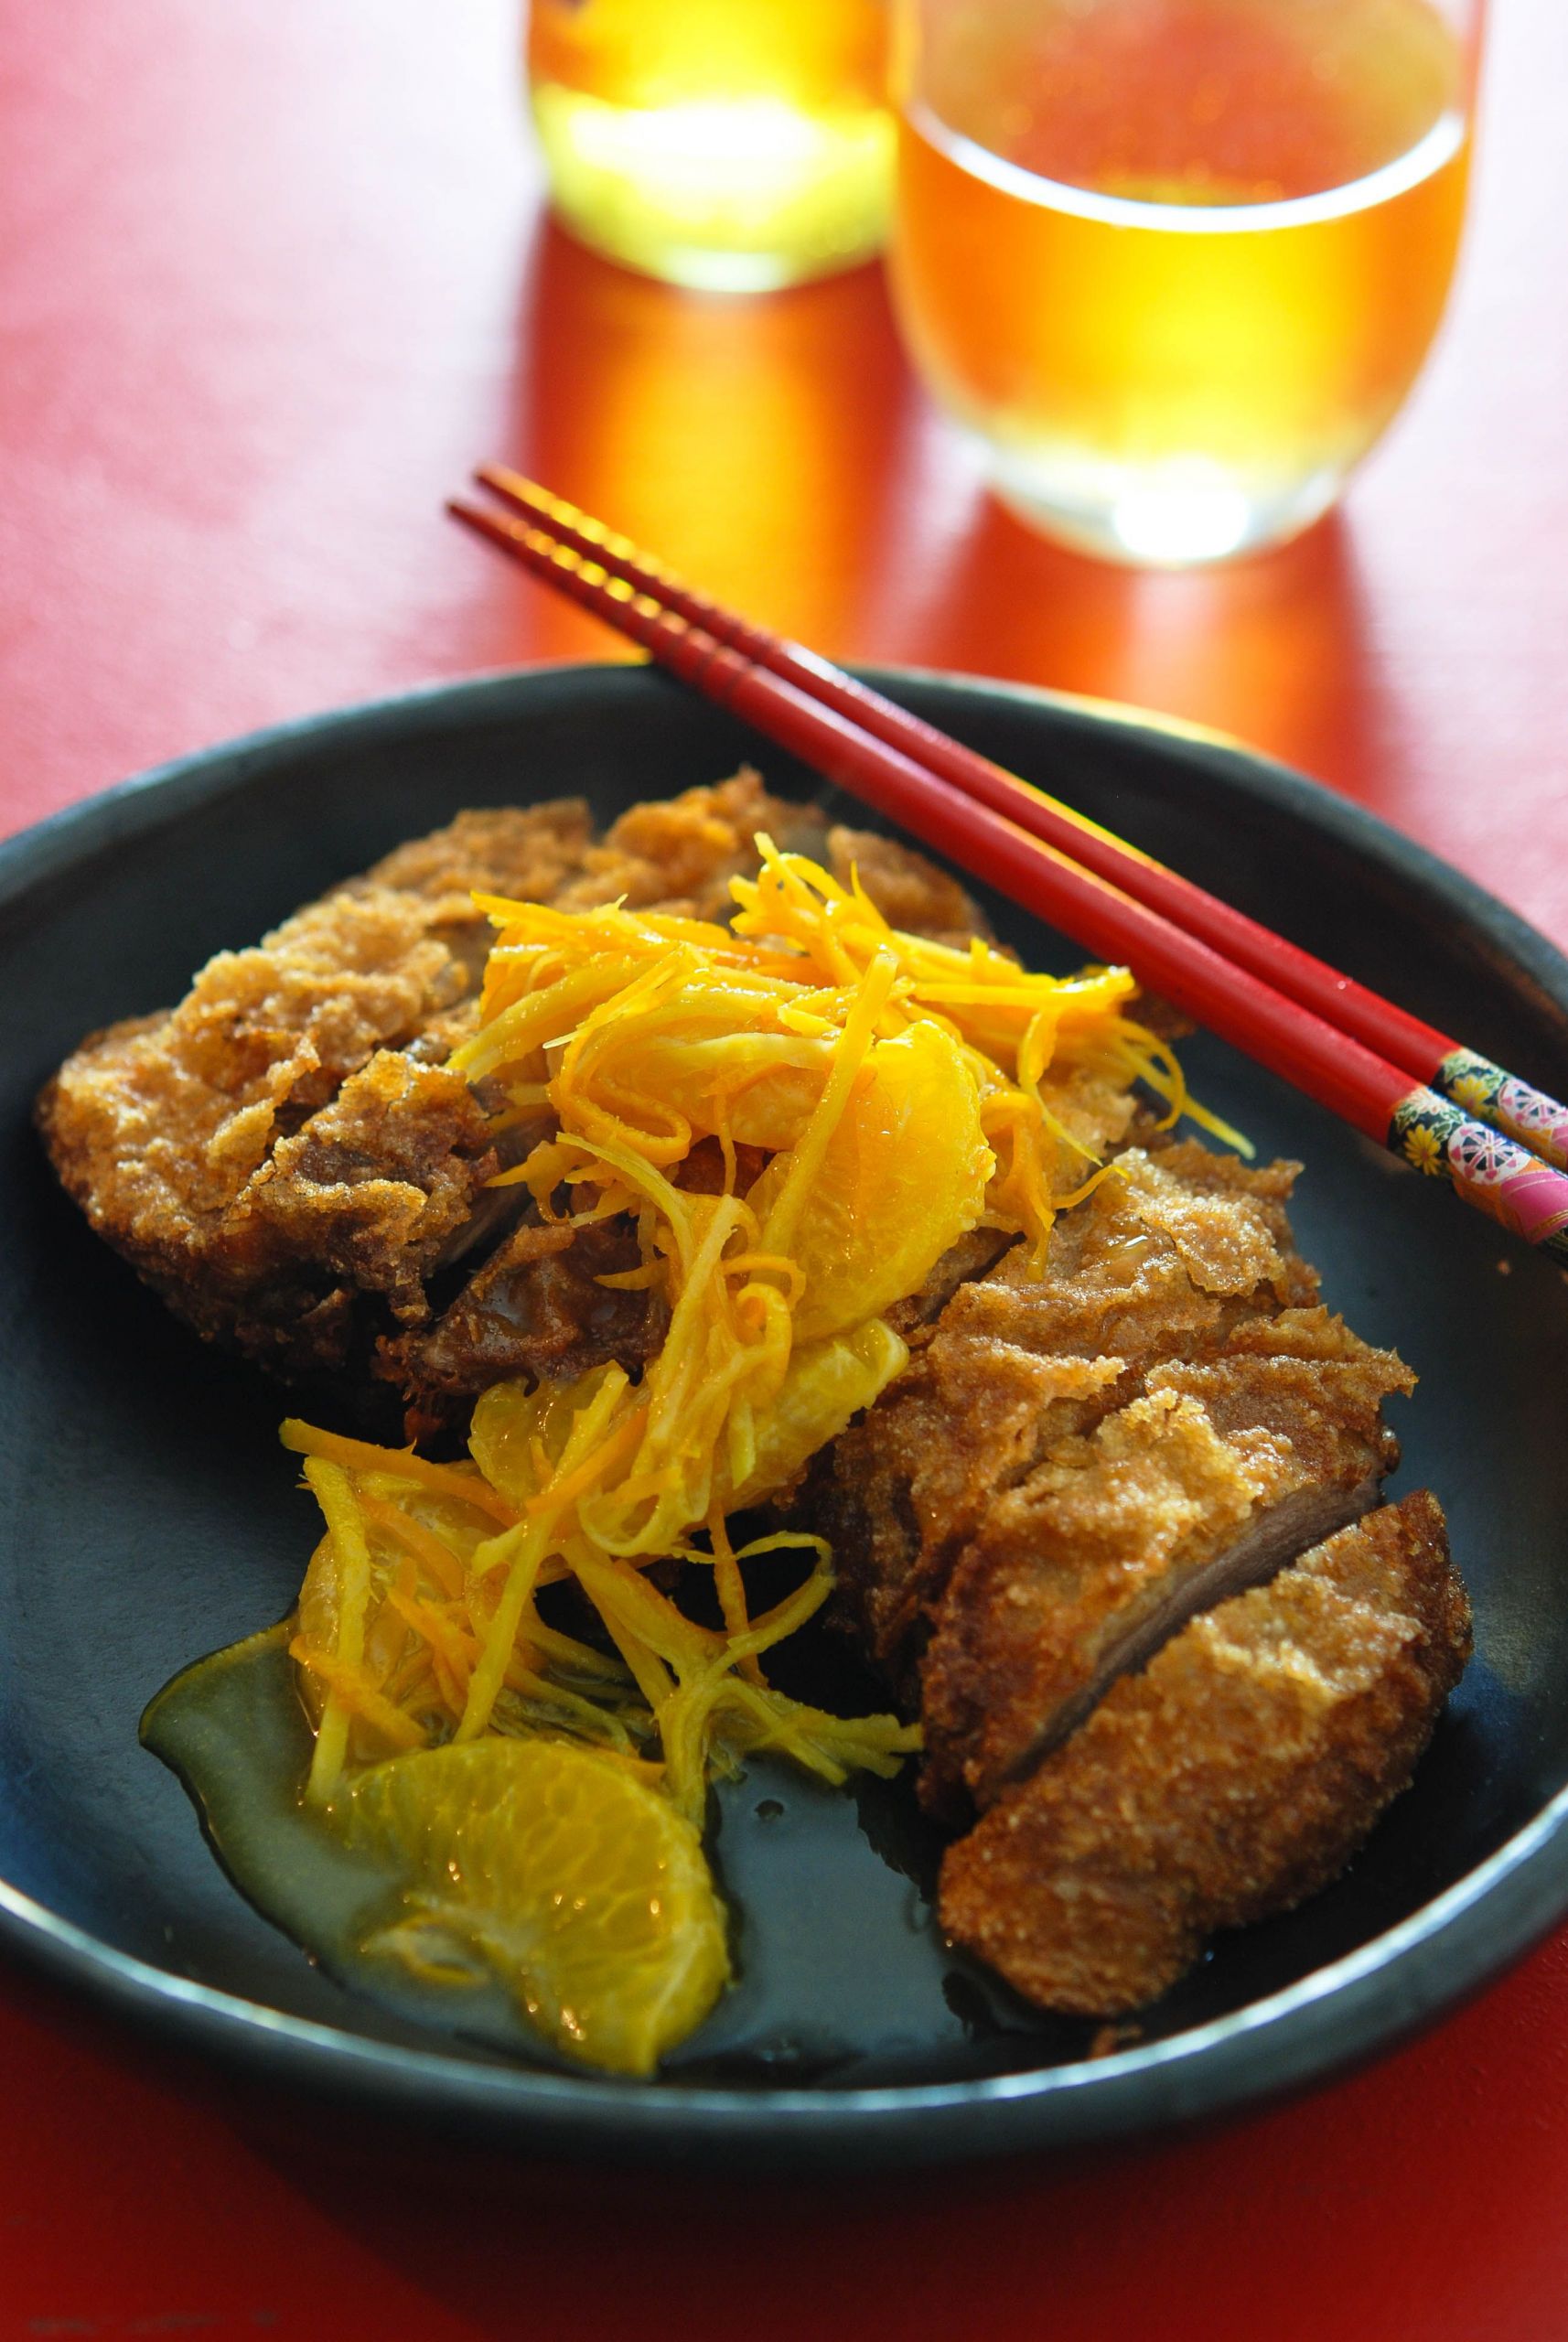 Mandarin Duck Recipes
 Neil Perry’s ‘Crispy pressed duck with mandarin sauce